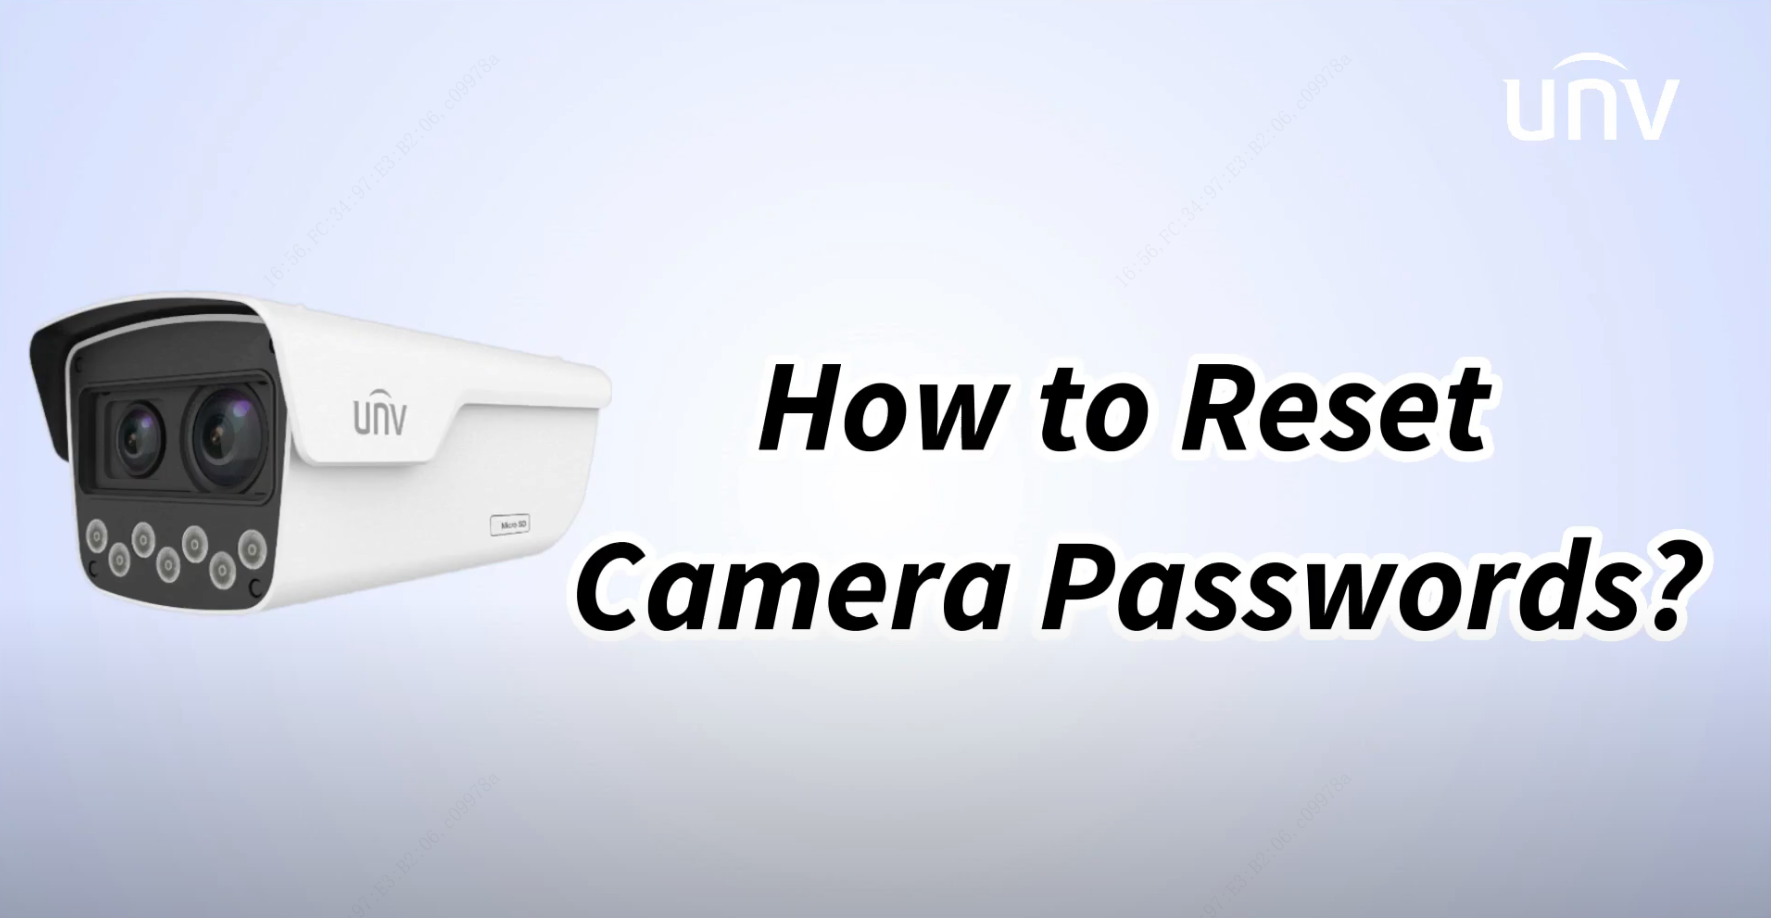 Reset Camera Passwords Image